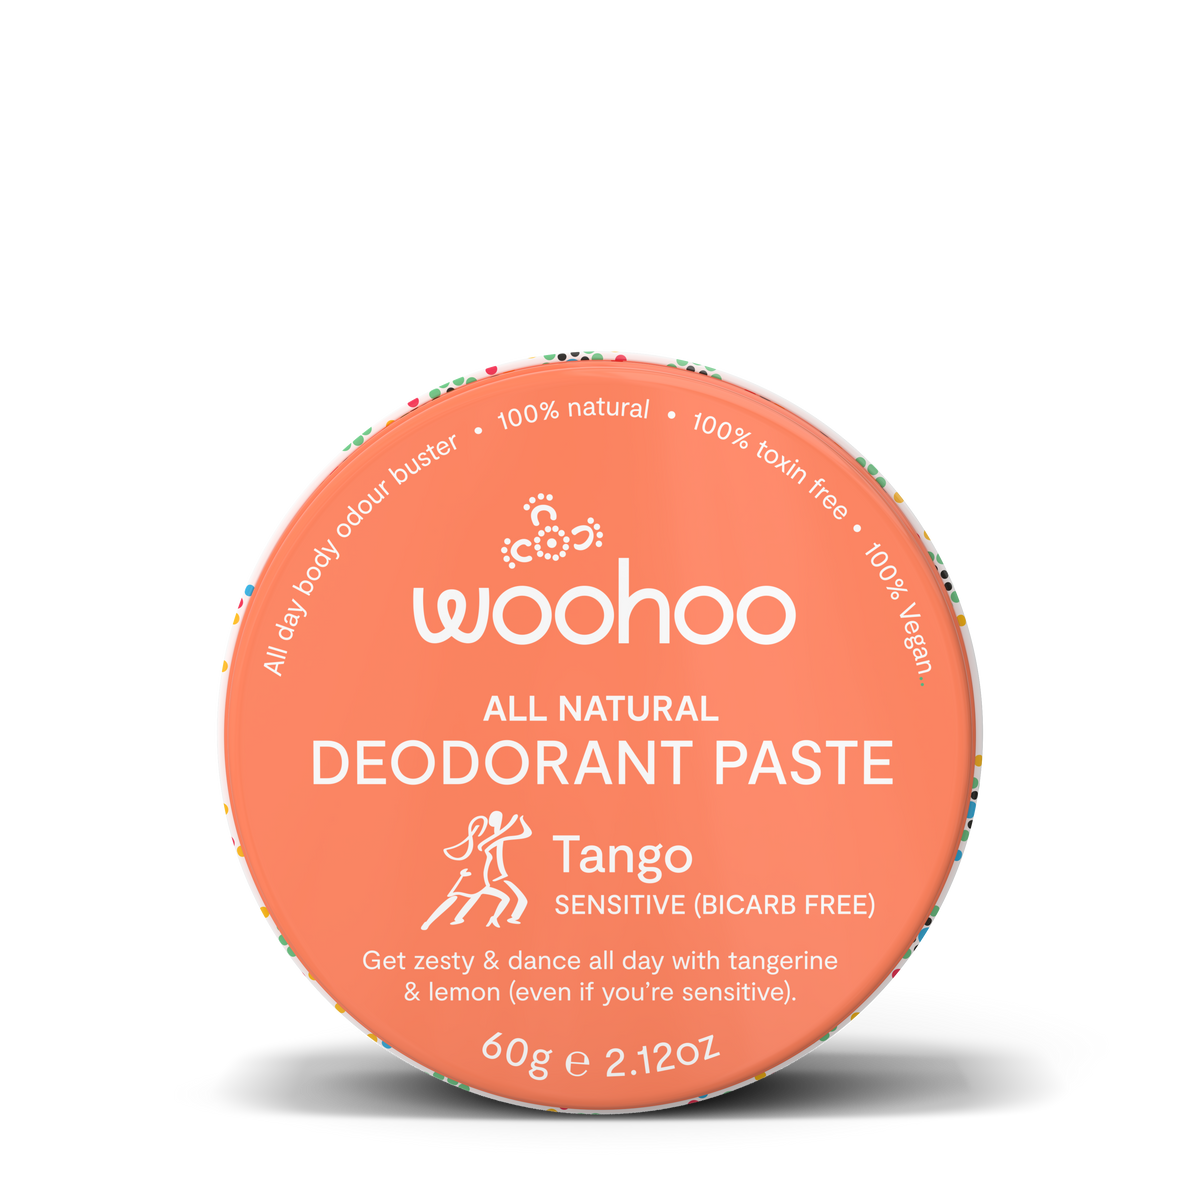 Woohoo All Natural Deodorant Paste (Tango) 60g